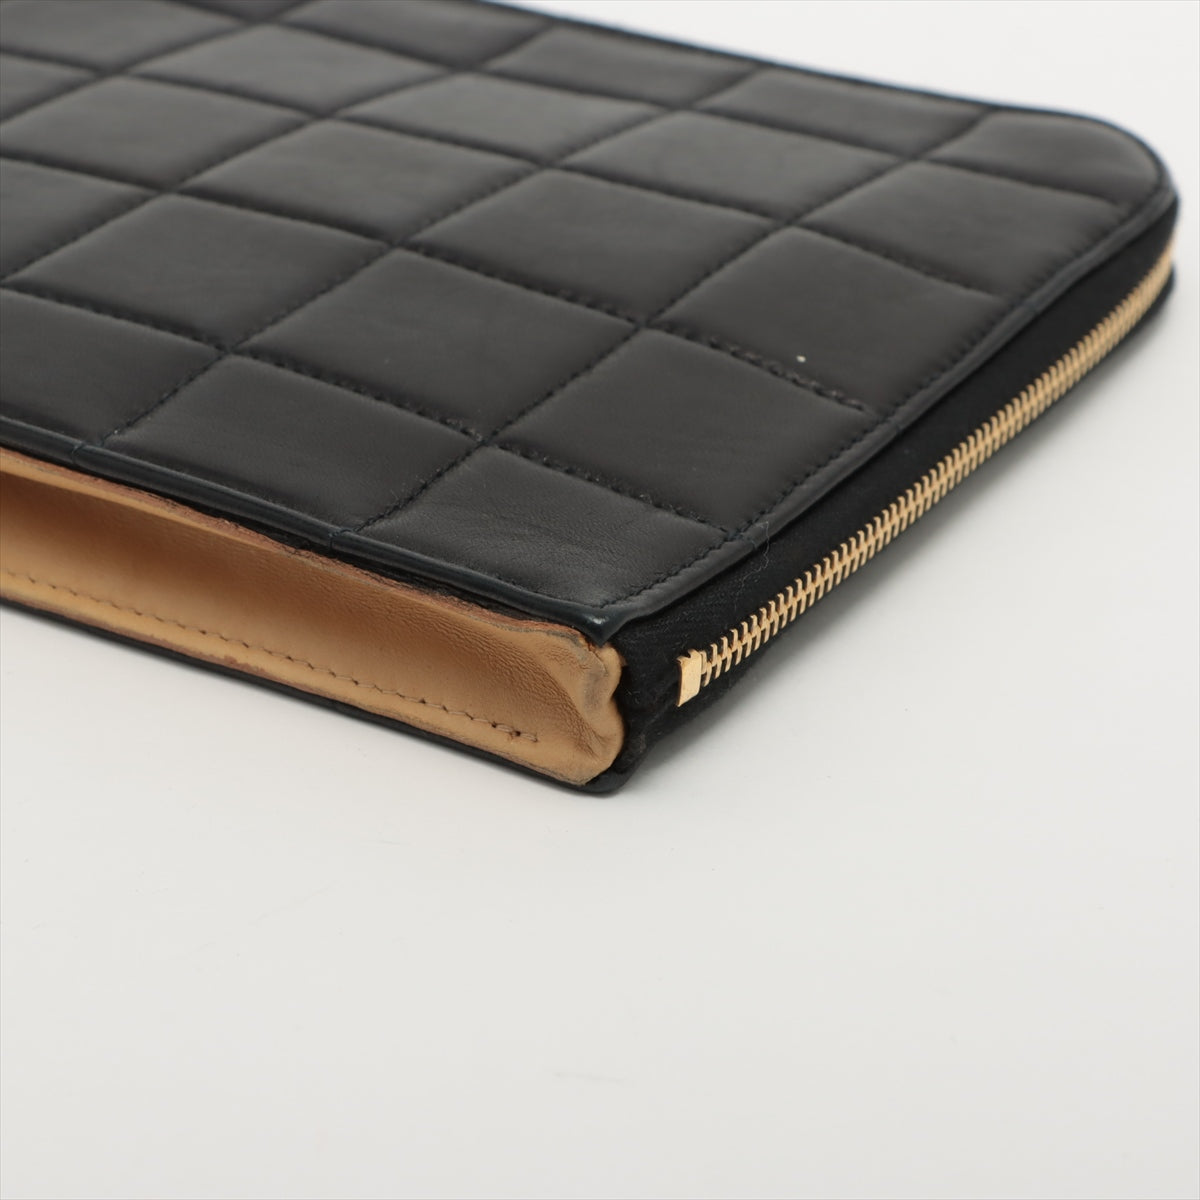 Chanel Chocolate Bar Lambskin Clutch Bag Black Gold Metal Fittings 7XXXXXX